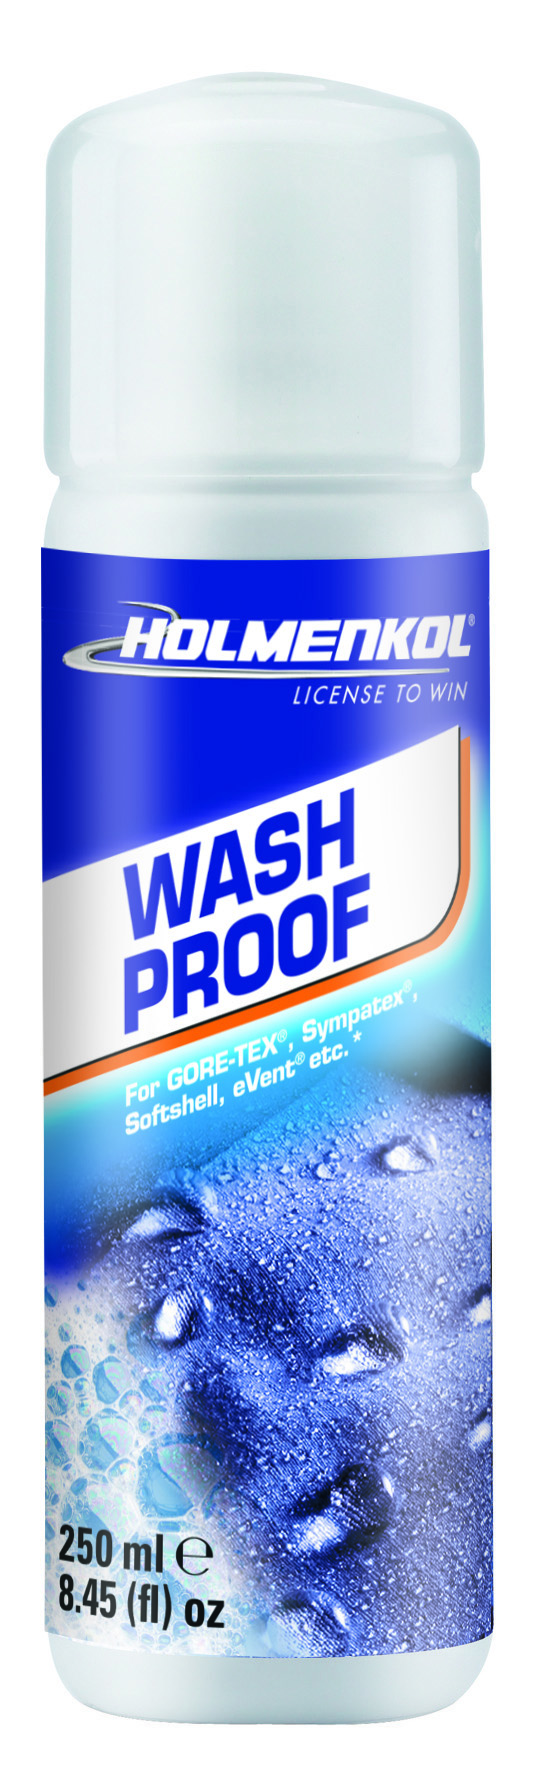 Holmenkol Wash Proof 